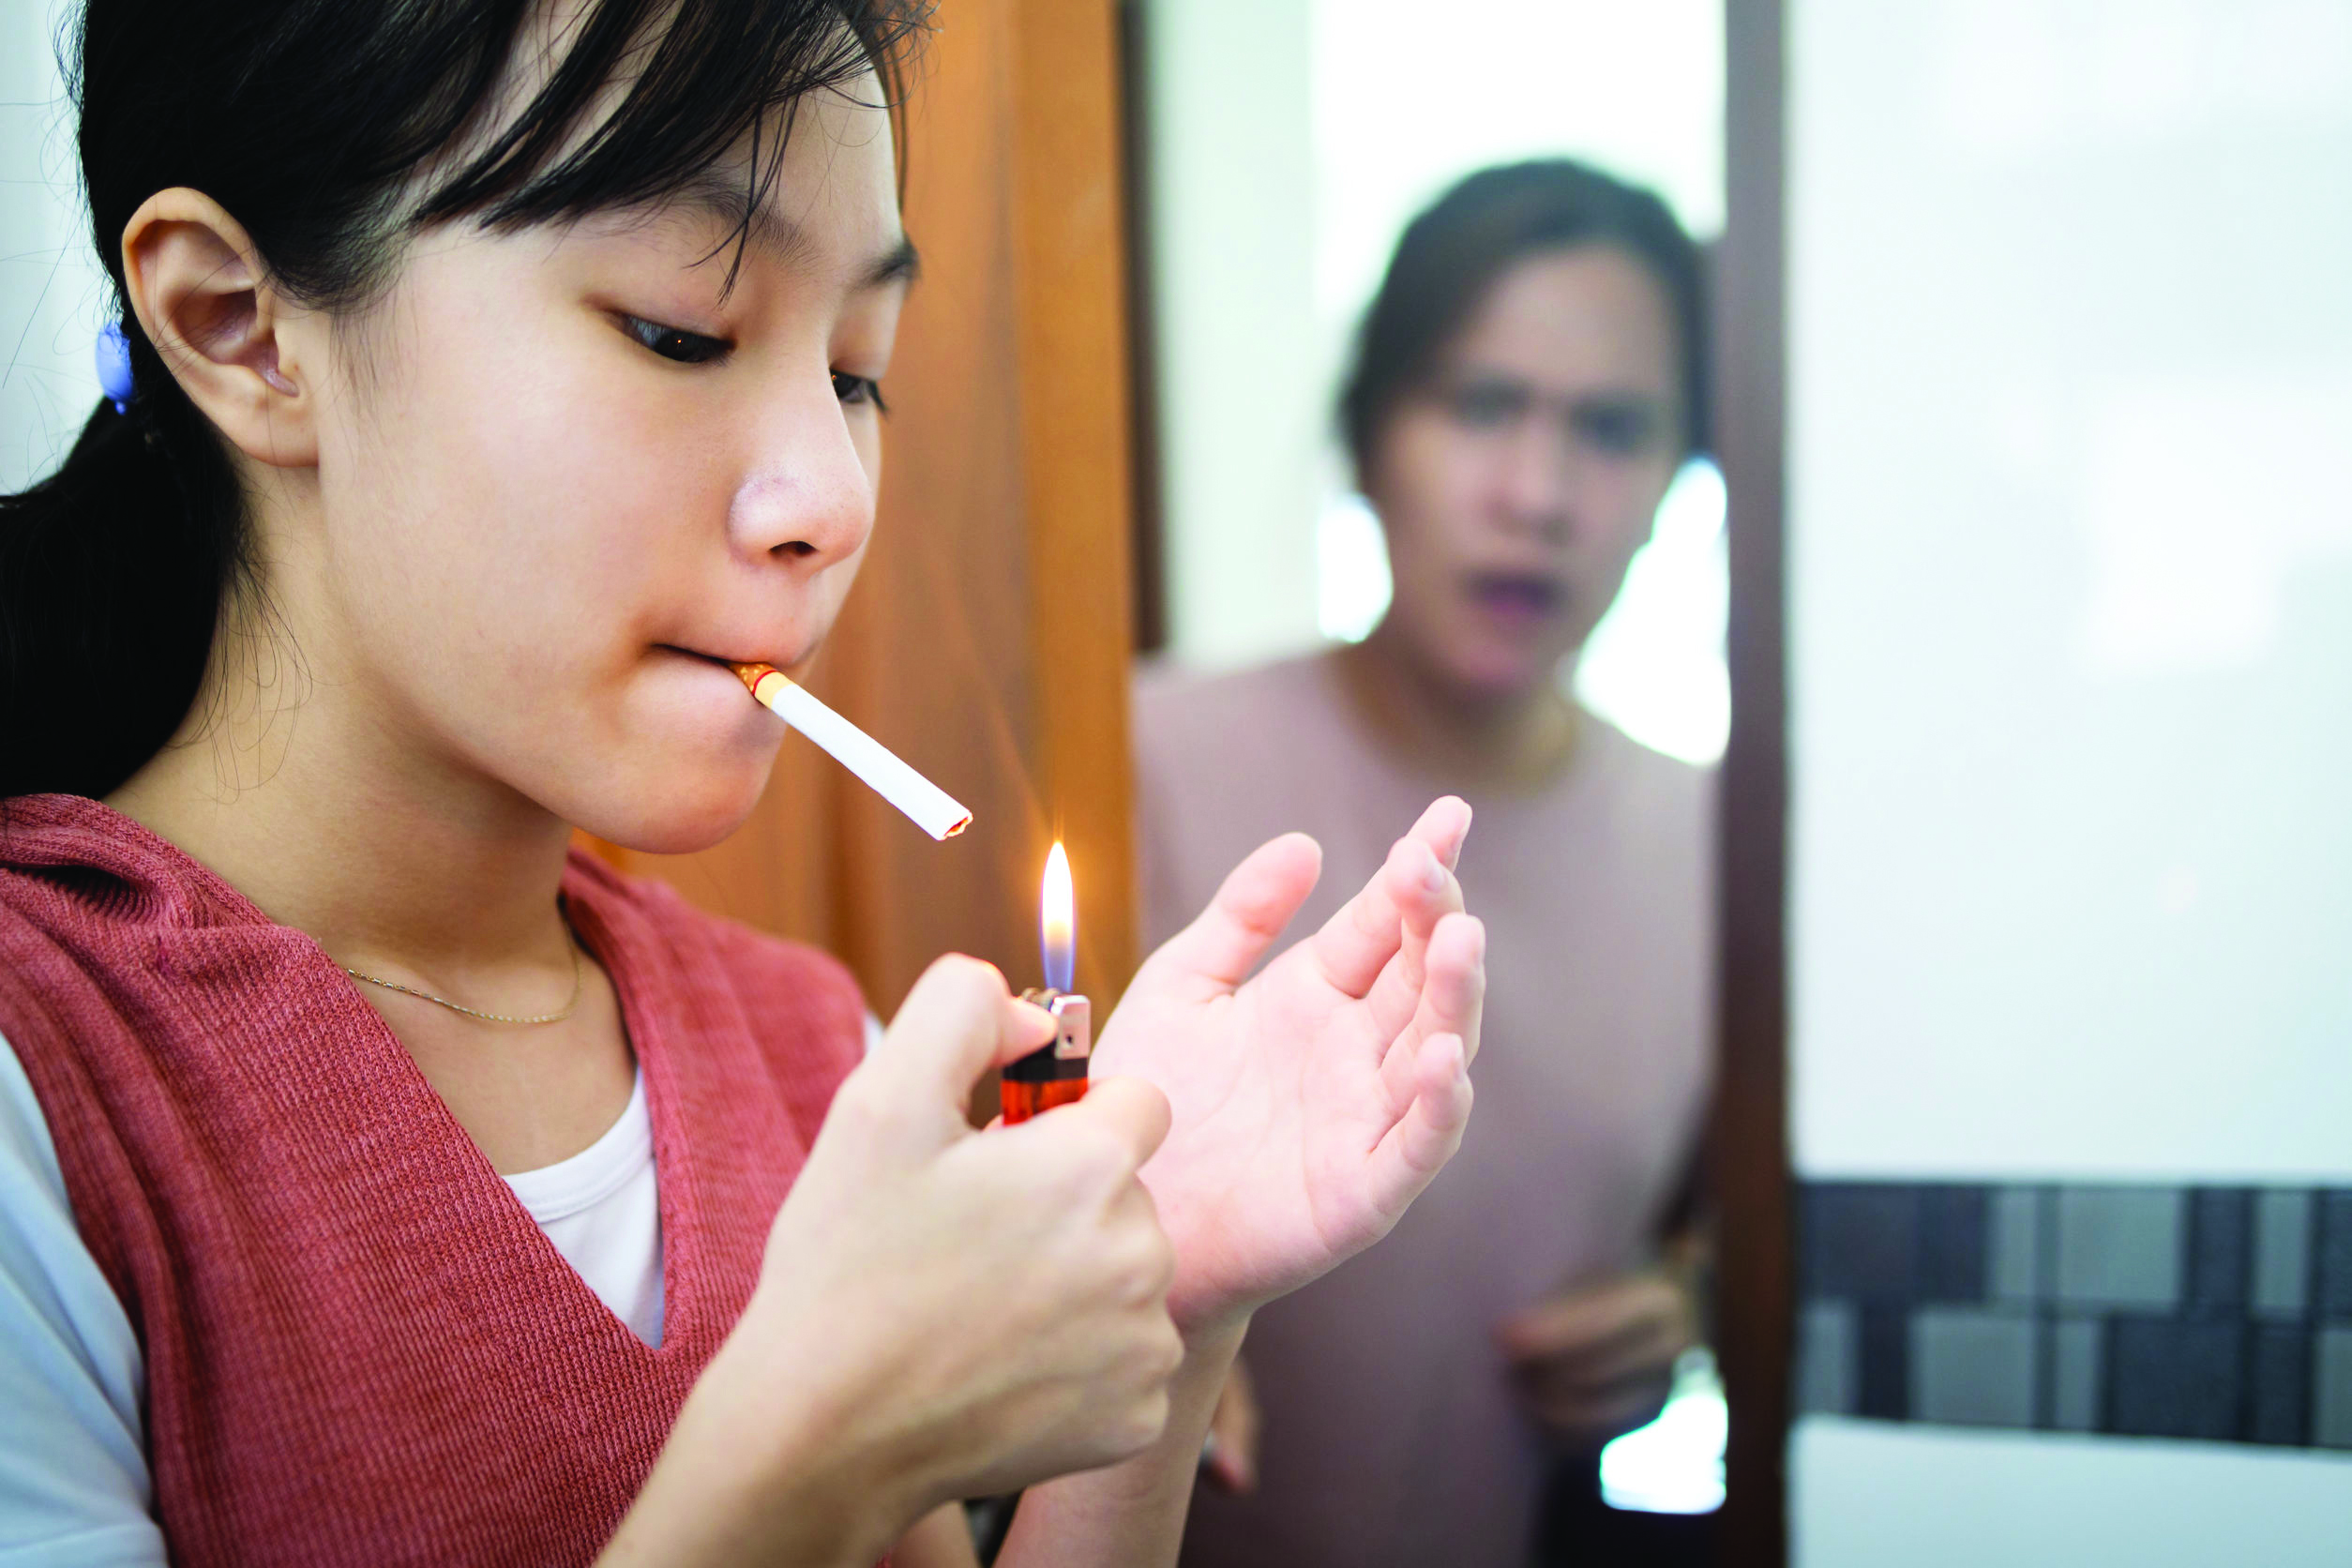 Child Girl Light Up The Cigarette At Homewoman Secretly Smoking